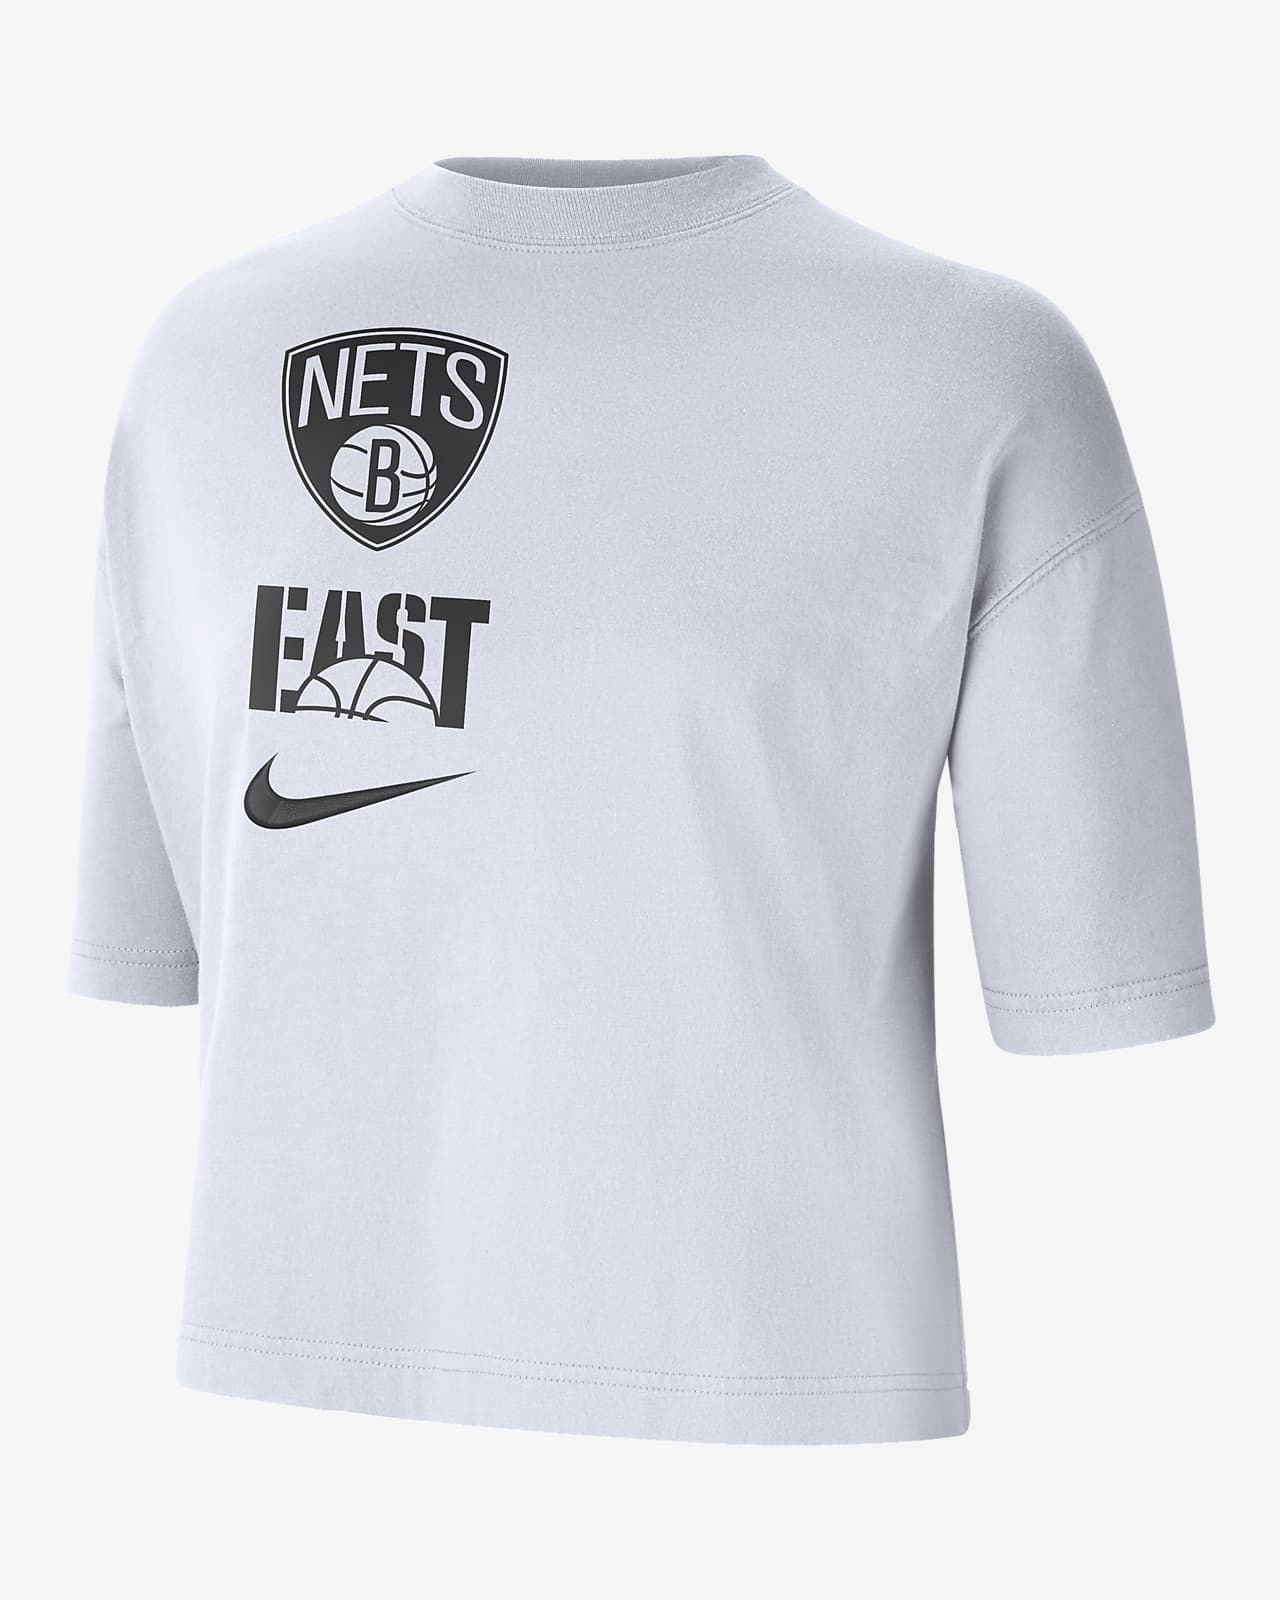 Tee-shirt Nike NBA Brooklyn Nets pour femme